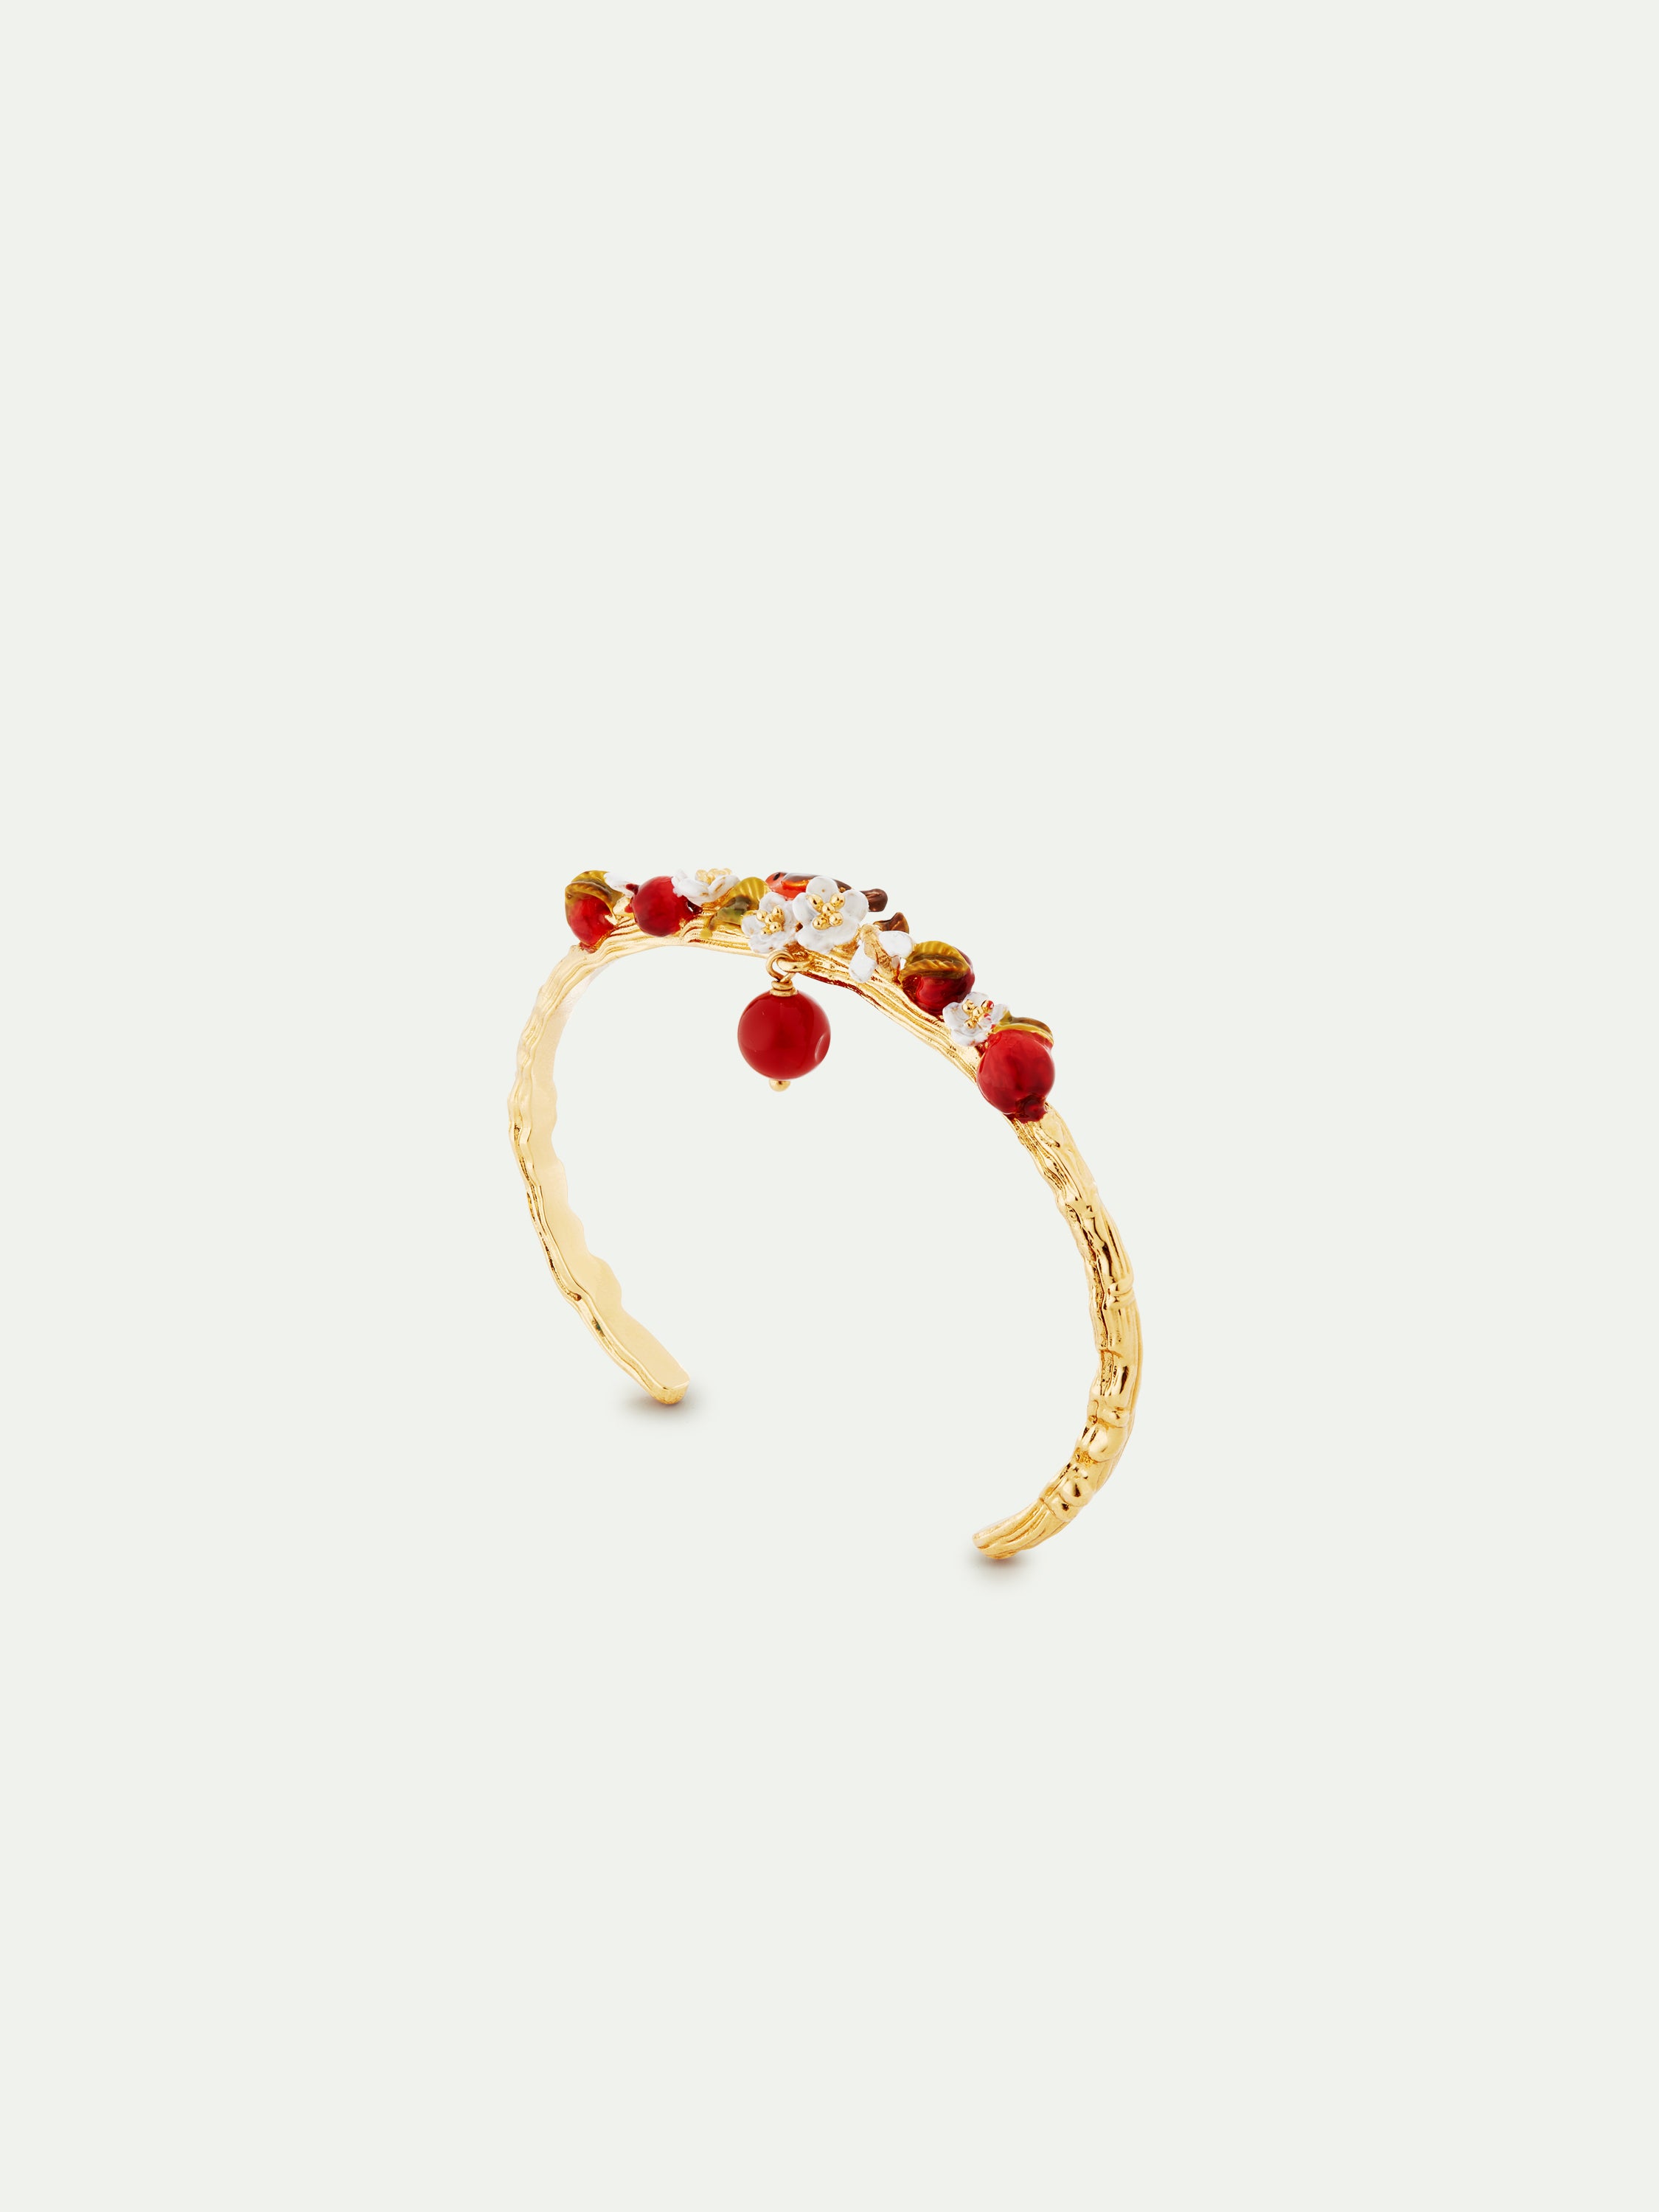 Apple, robin, bee and apple blossom cuff bracelet